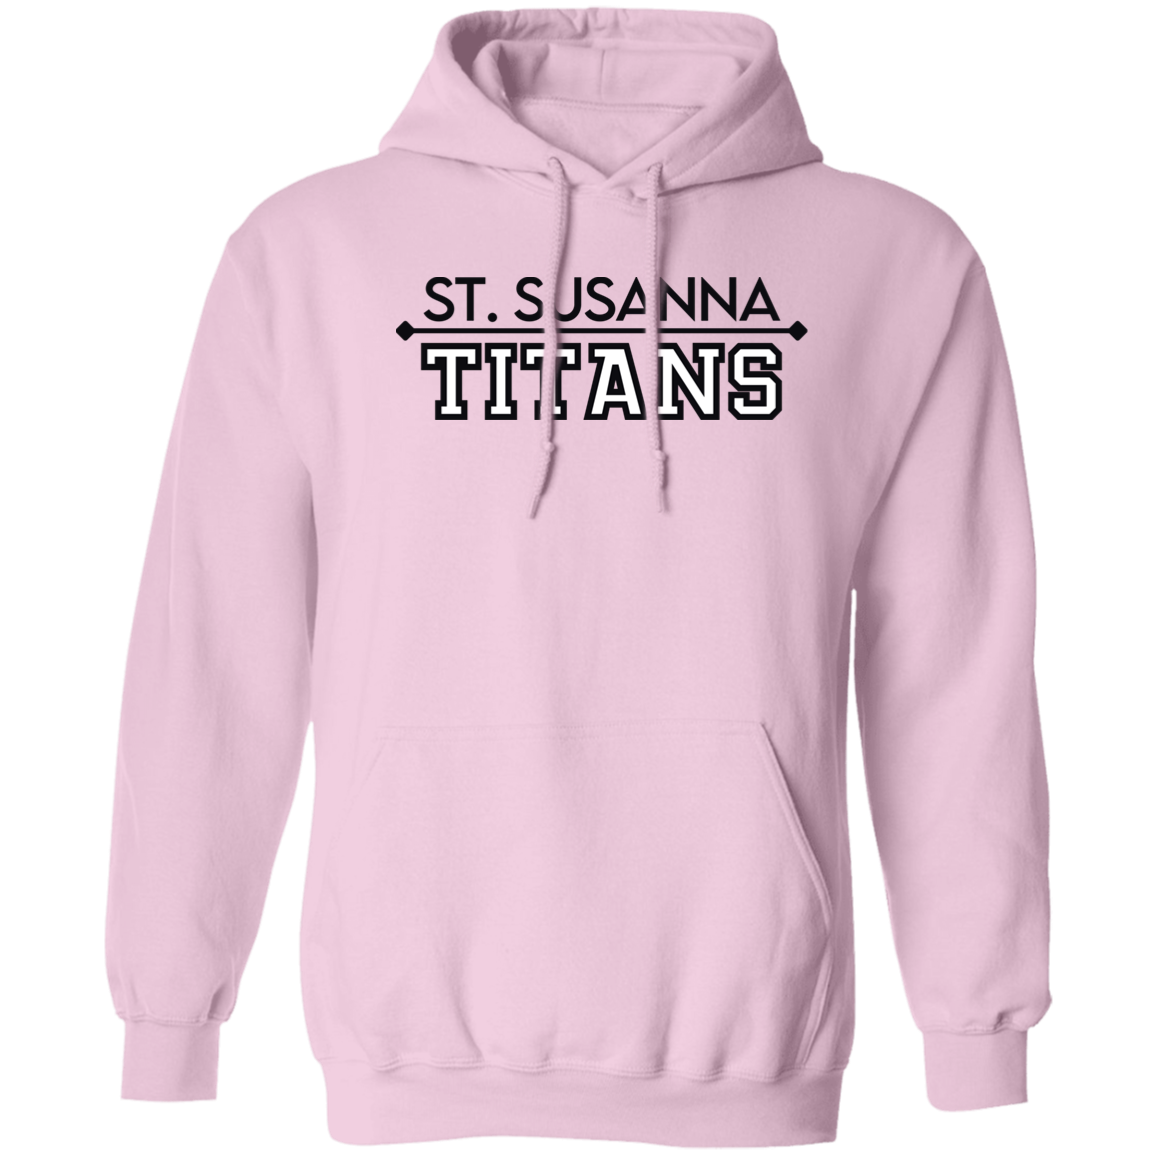 St. Susanna Titans (black/white) Pullover Hoodie